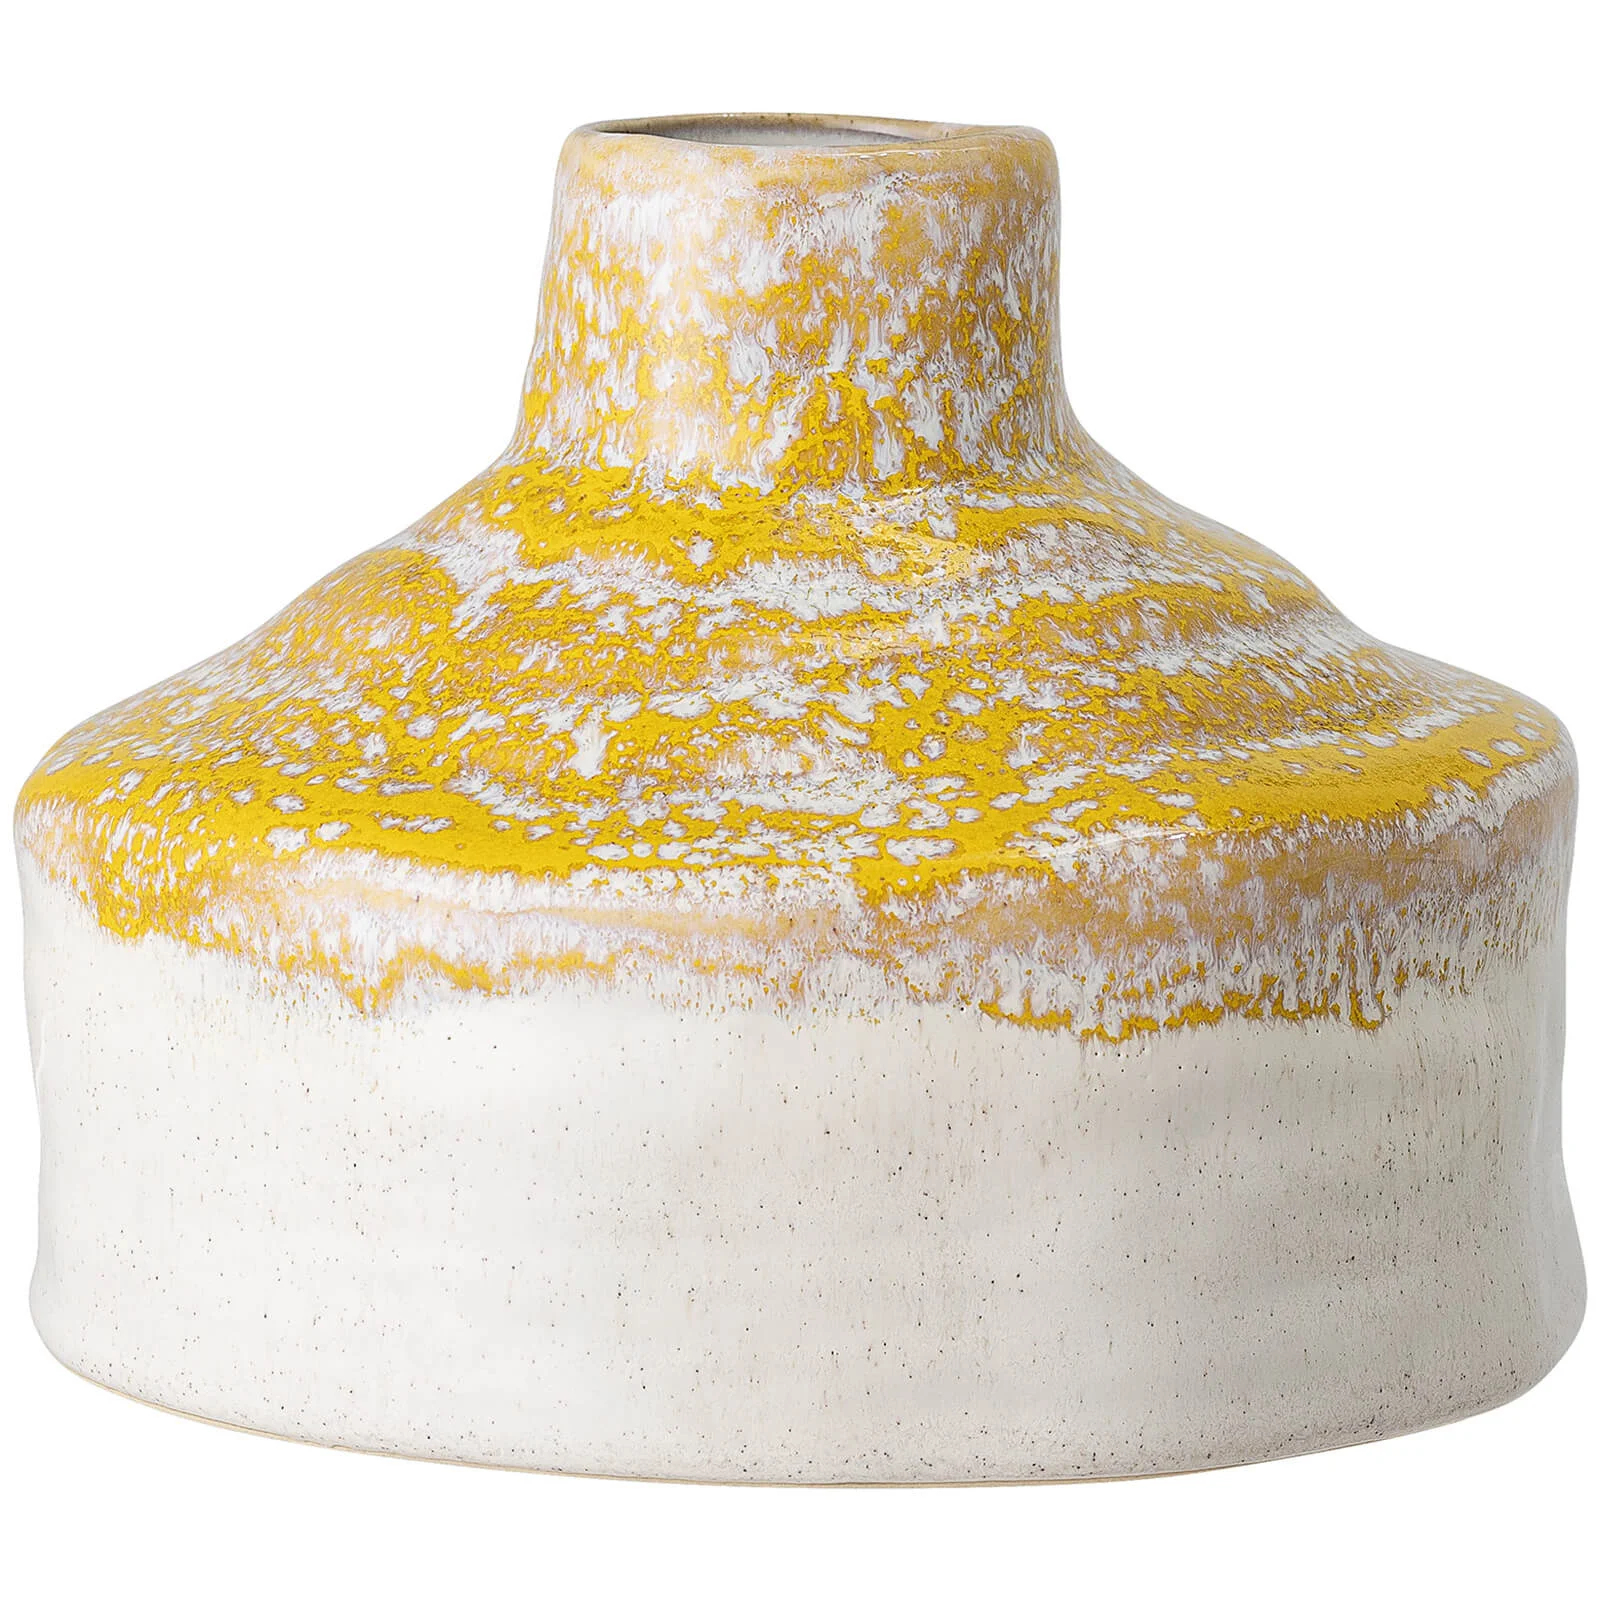 Bloomingville Reactive Glaze Vase - Yellow Image 1